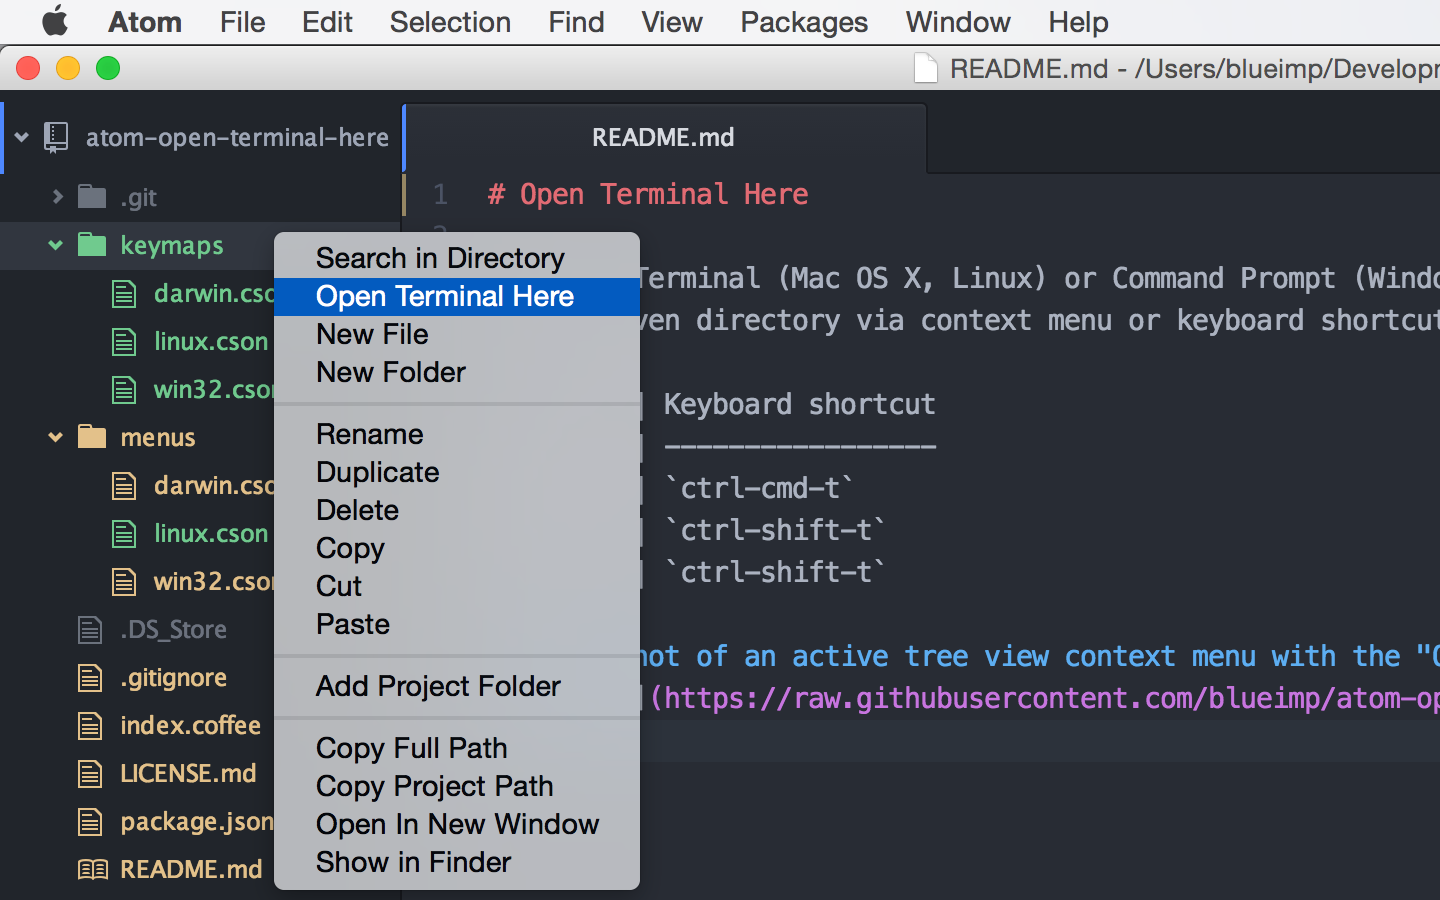 Screenshot of the "Open Terminal Here" menu item displayed